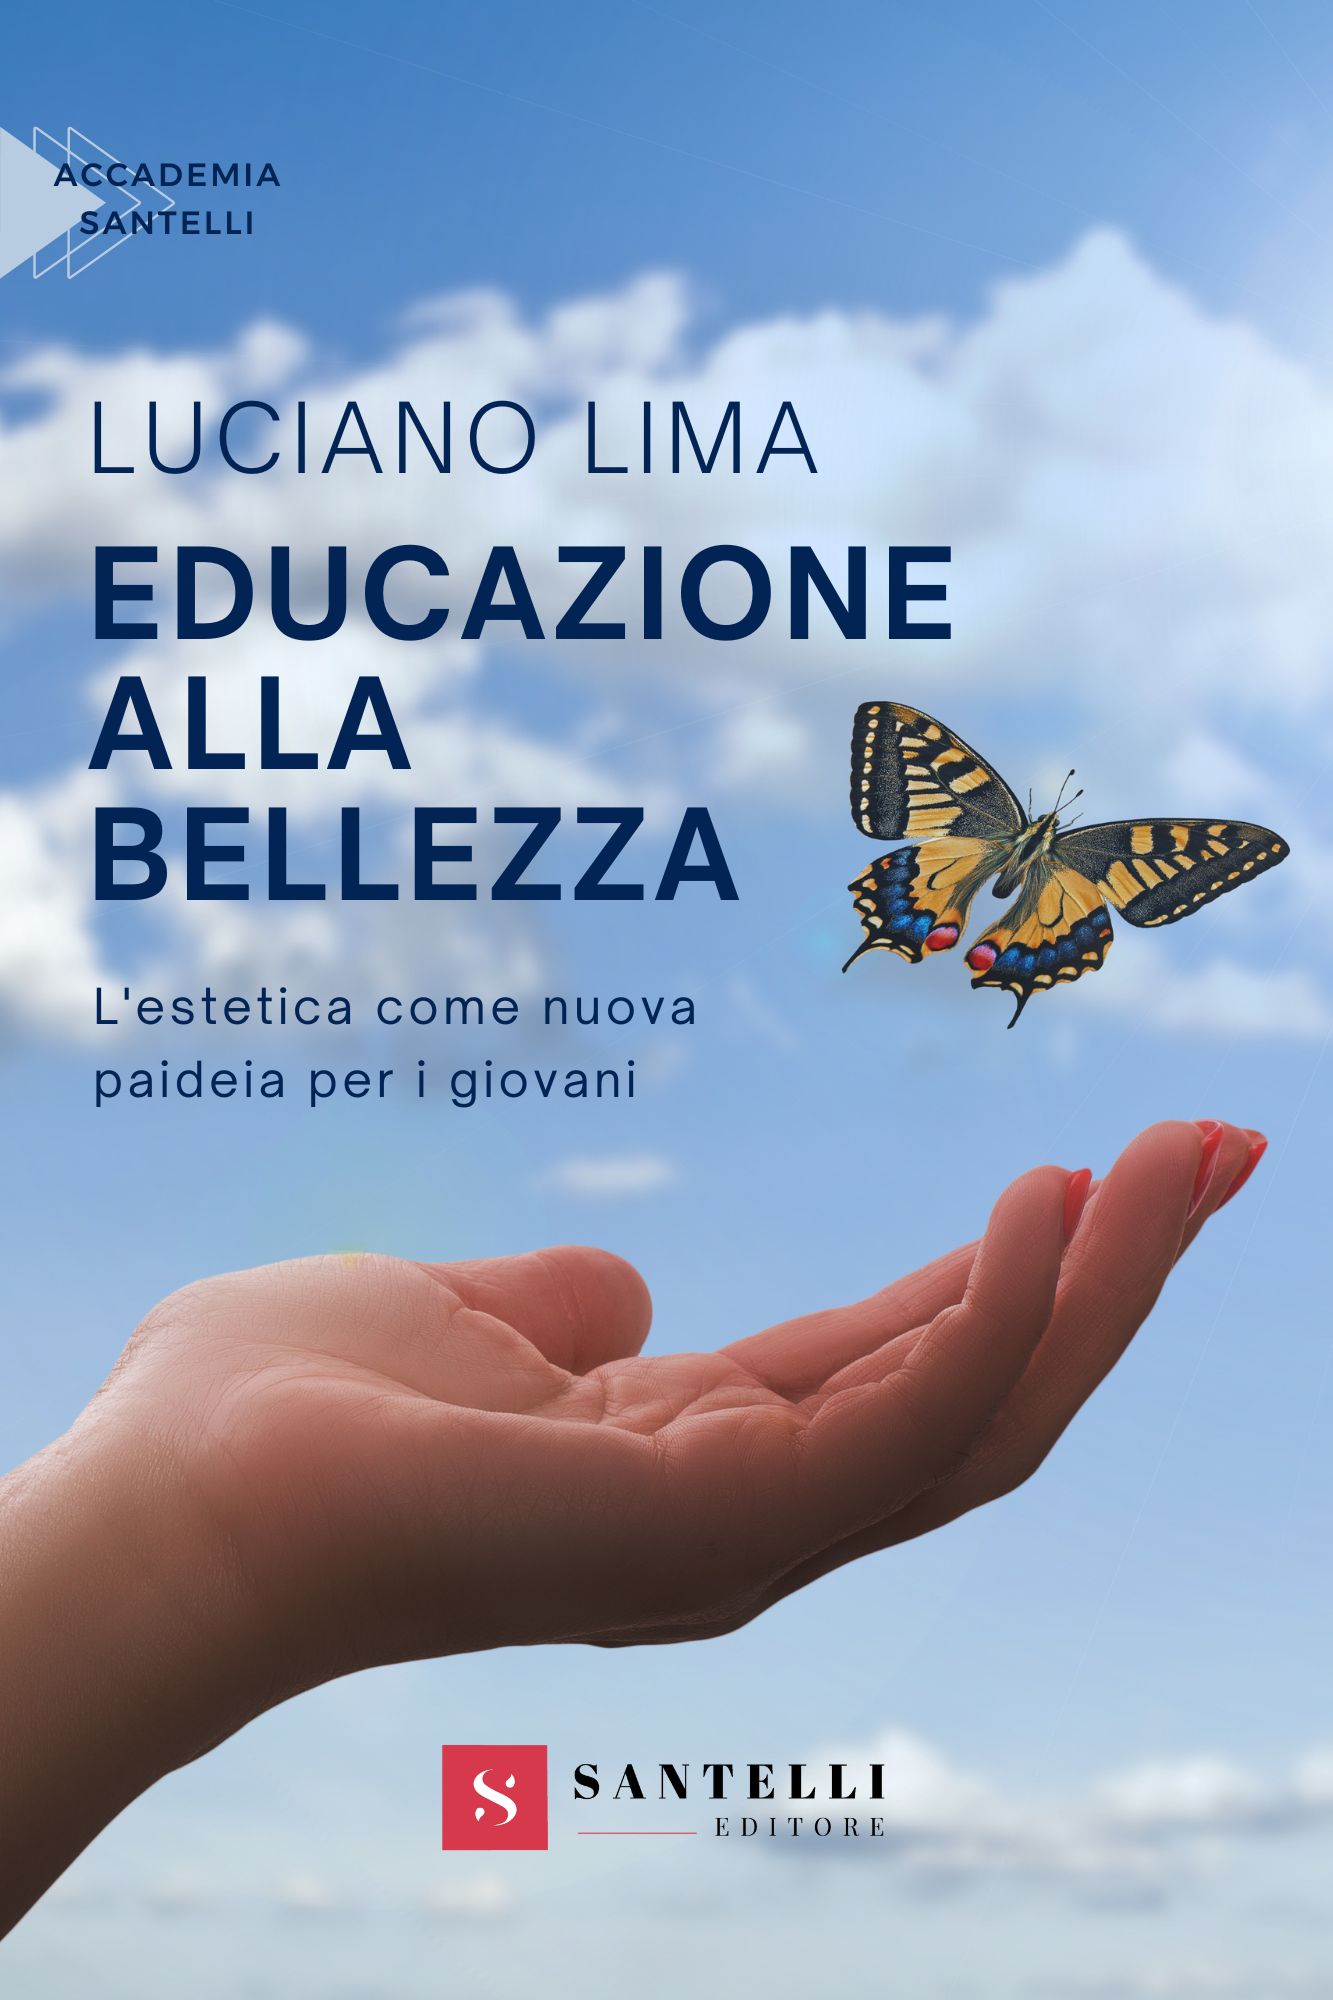 COVER LIMA Bellezza FRONTE STAMPA 280 420 mm